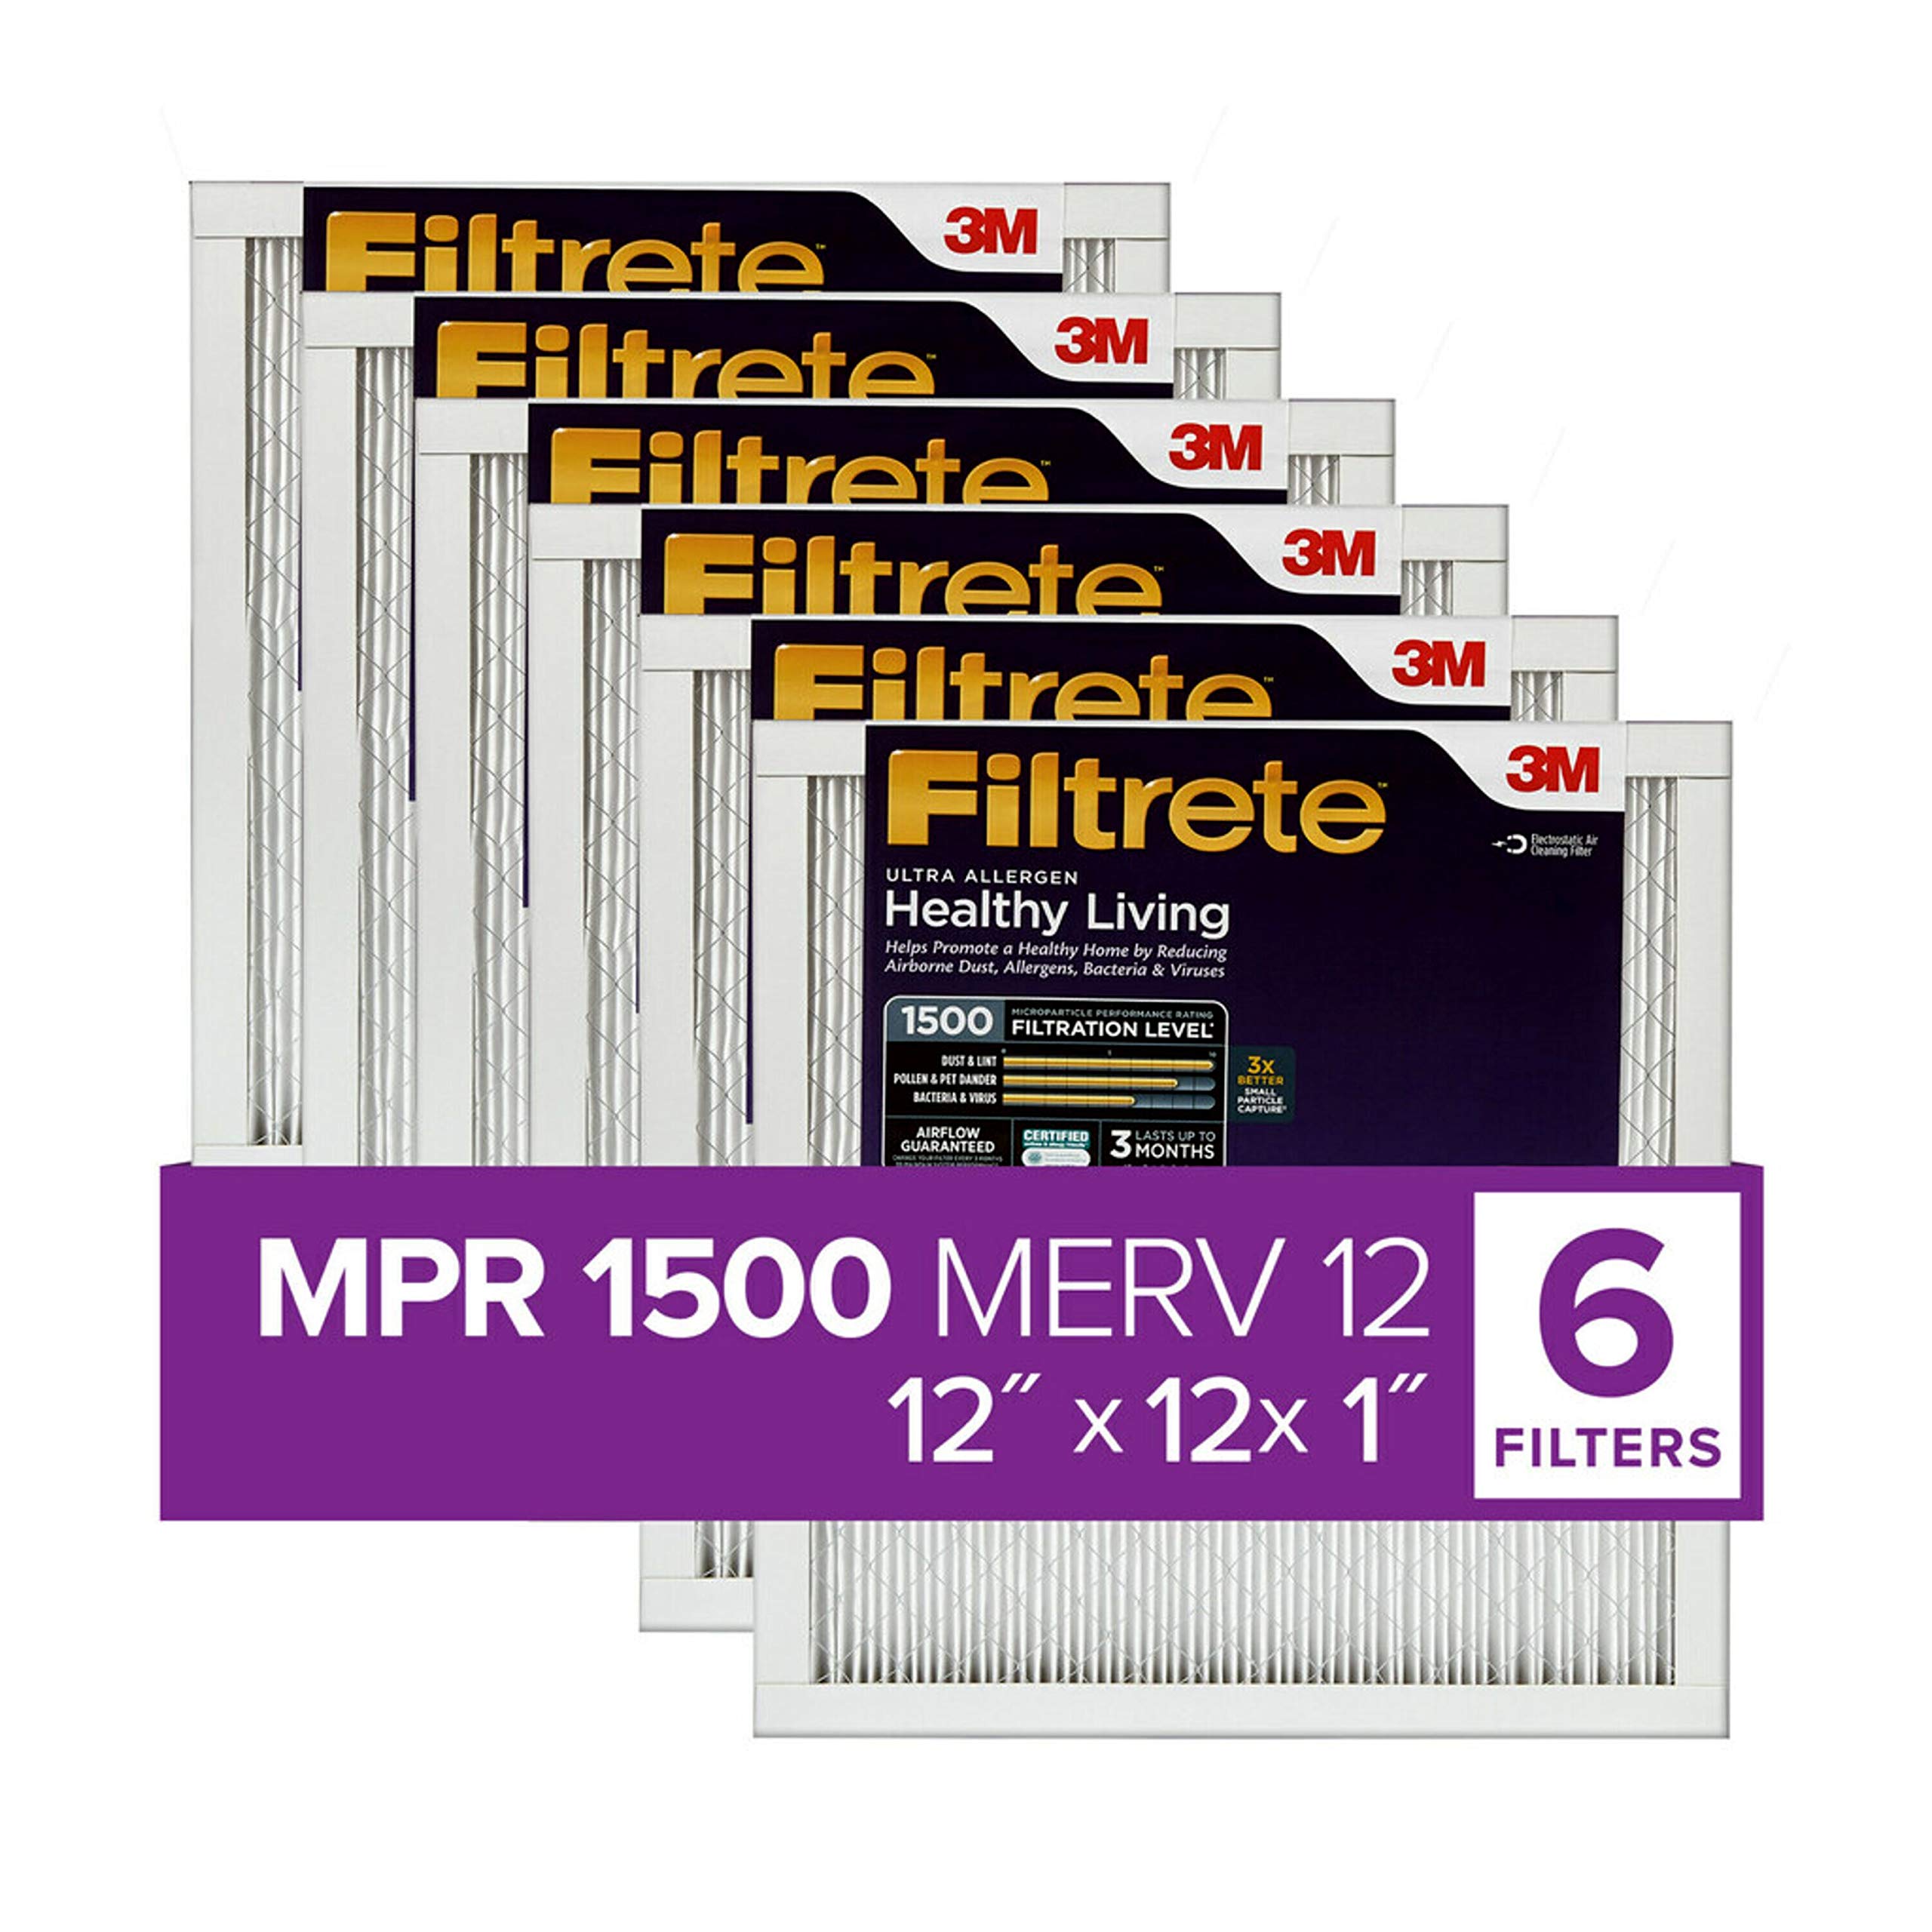 Filtrete 12x12x1 空气过滤器，MPR 1500，MERV 12，健康生活超过敏原 3 个月褶式 1 英寸空气过滤器，6 个过滤器